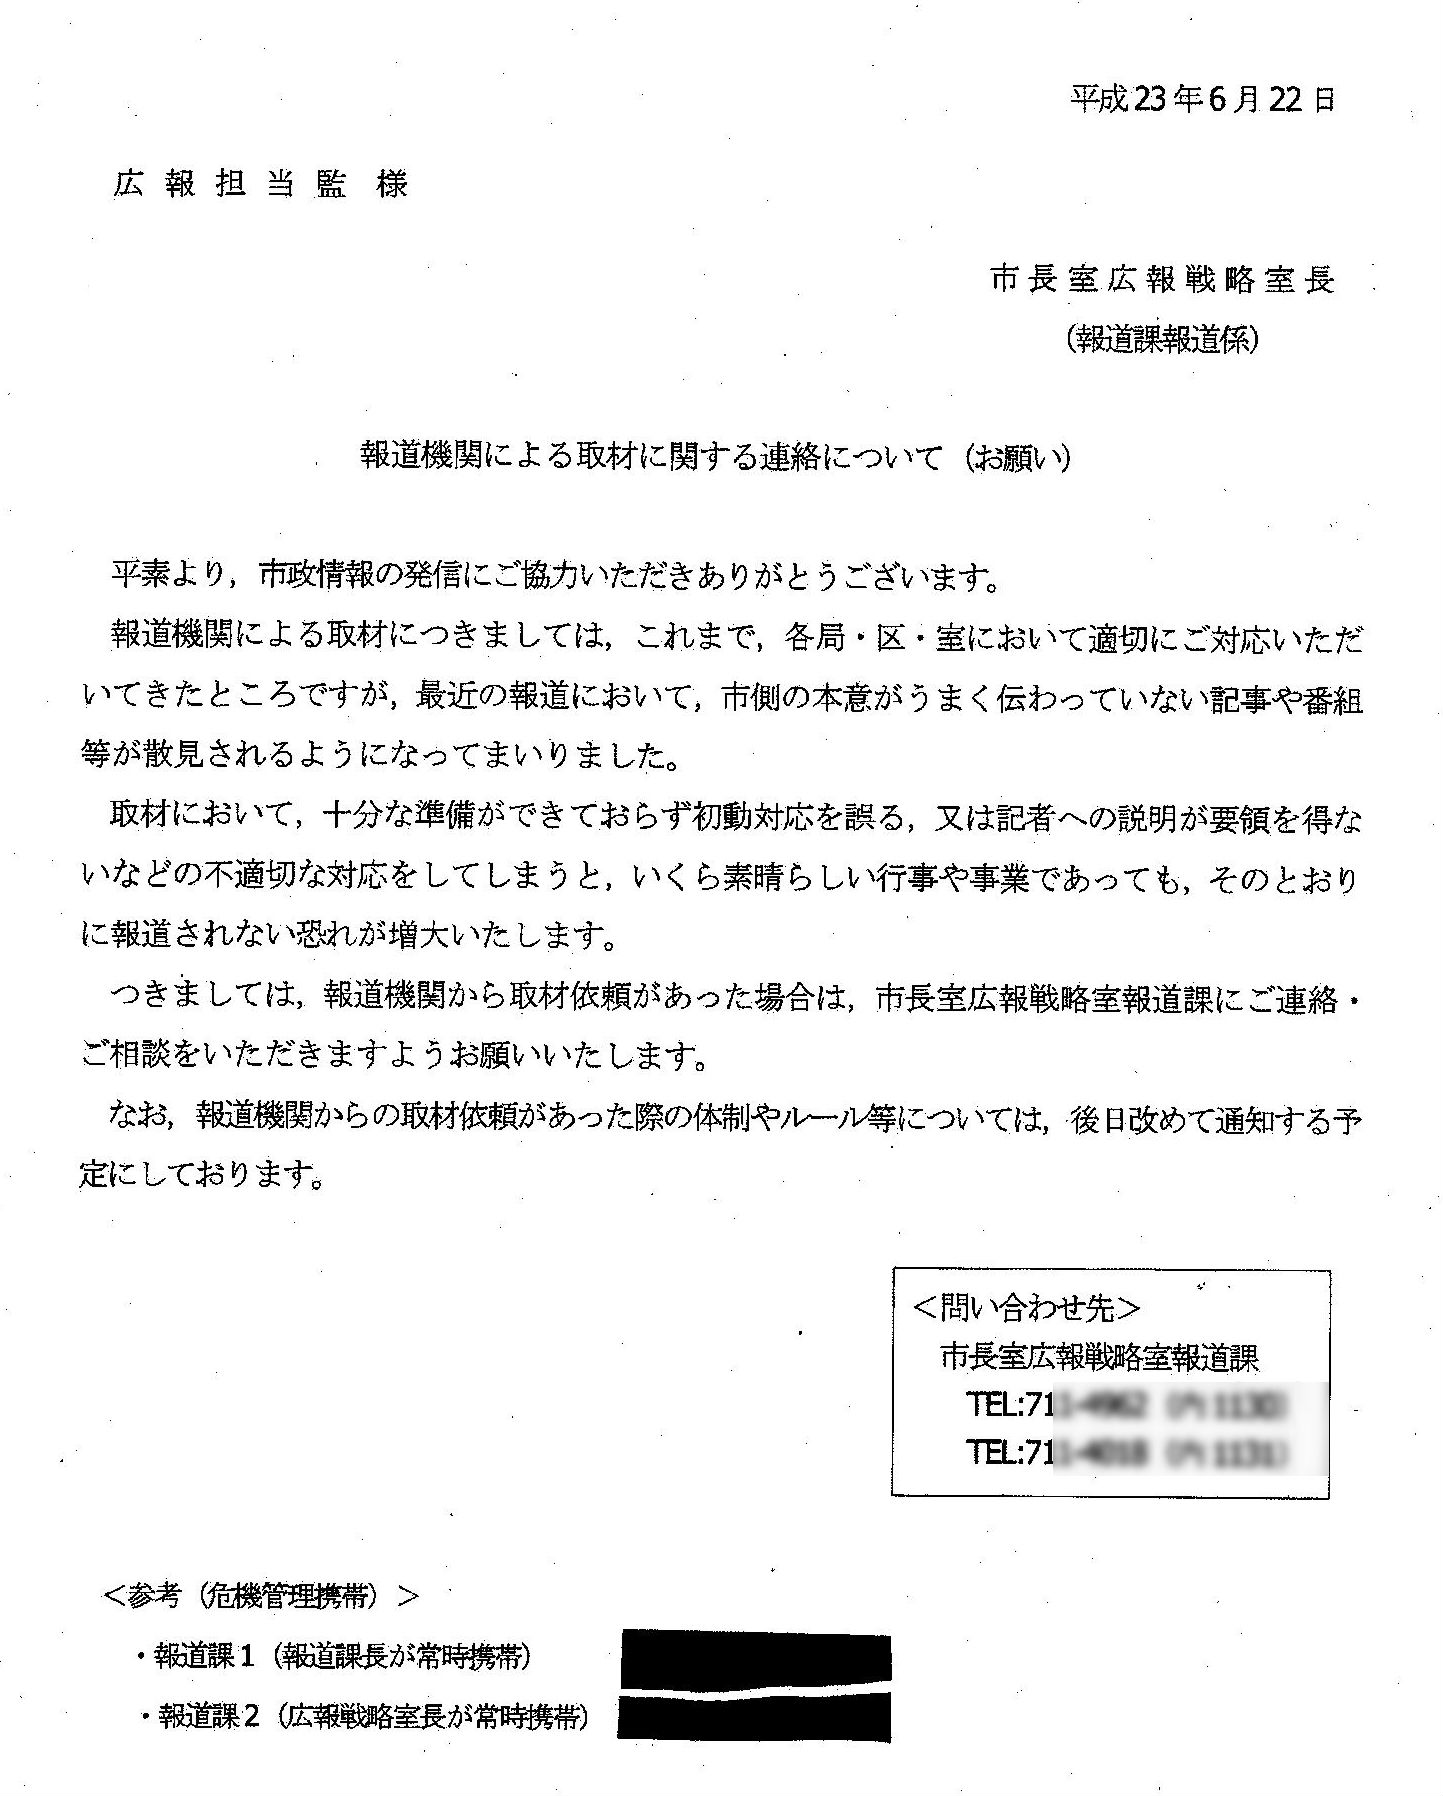 http://hunter-investigate.jp/news/2014/05/05/%E9%80%9A%E7%9F%A5.jpg